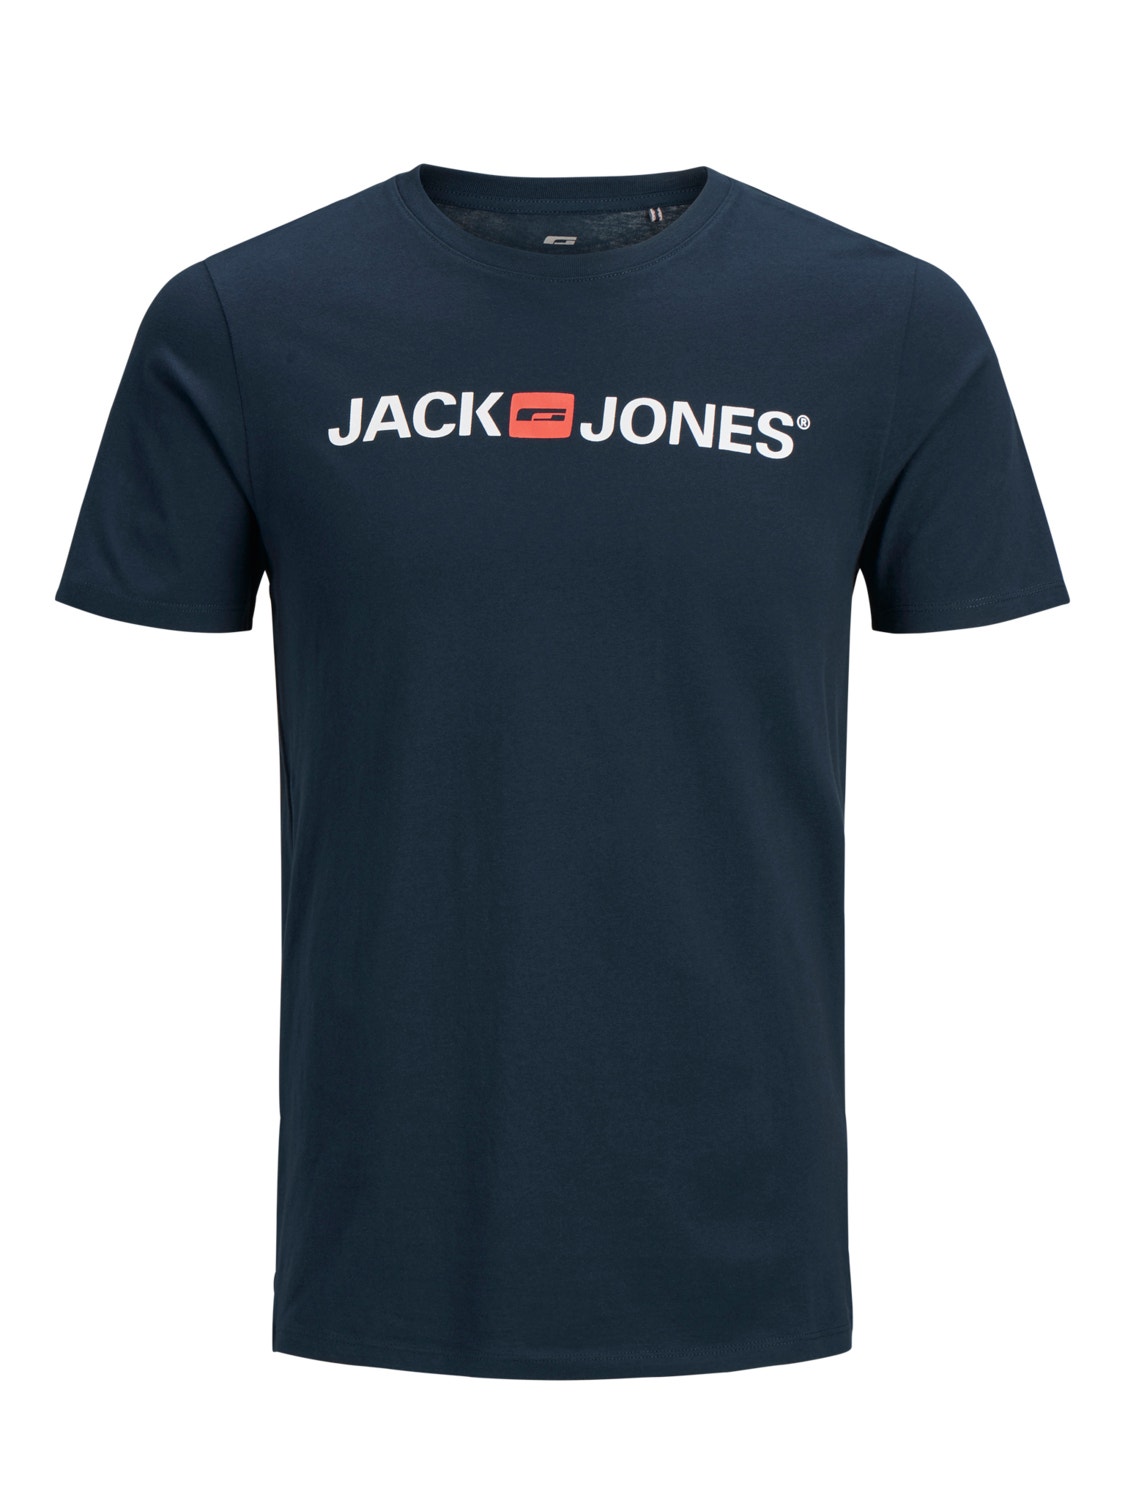 Jack & Jones Plus Size Camiseta Logotipo -Navy Blazer - 12184987